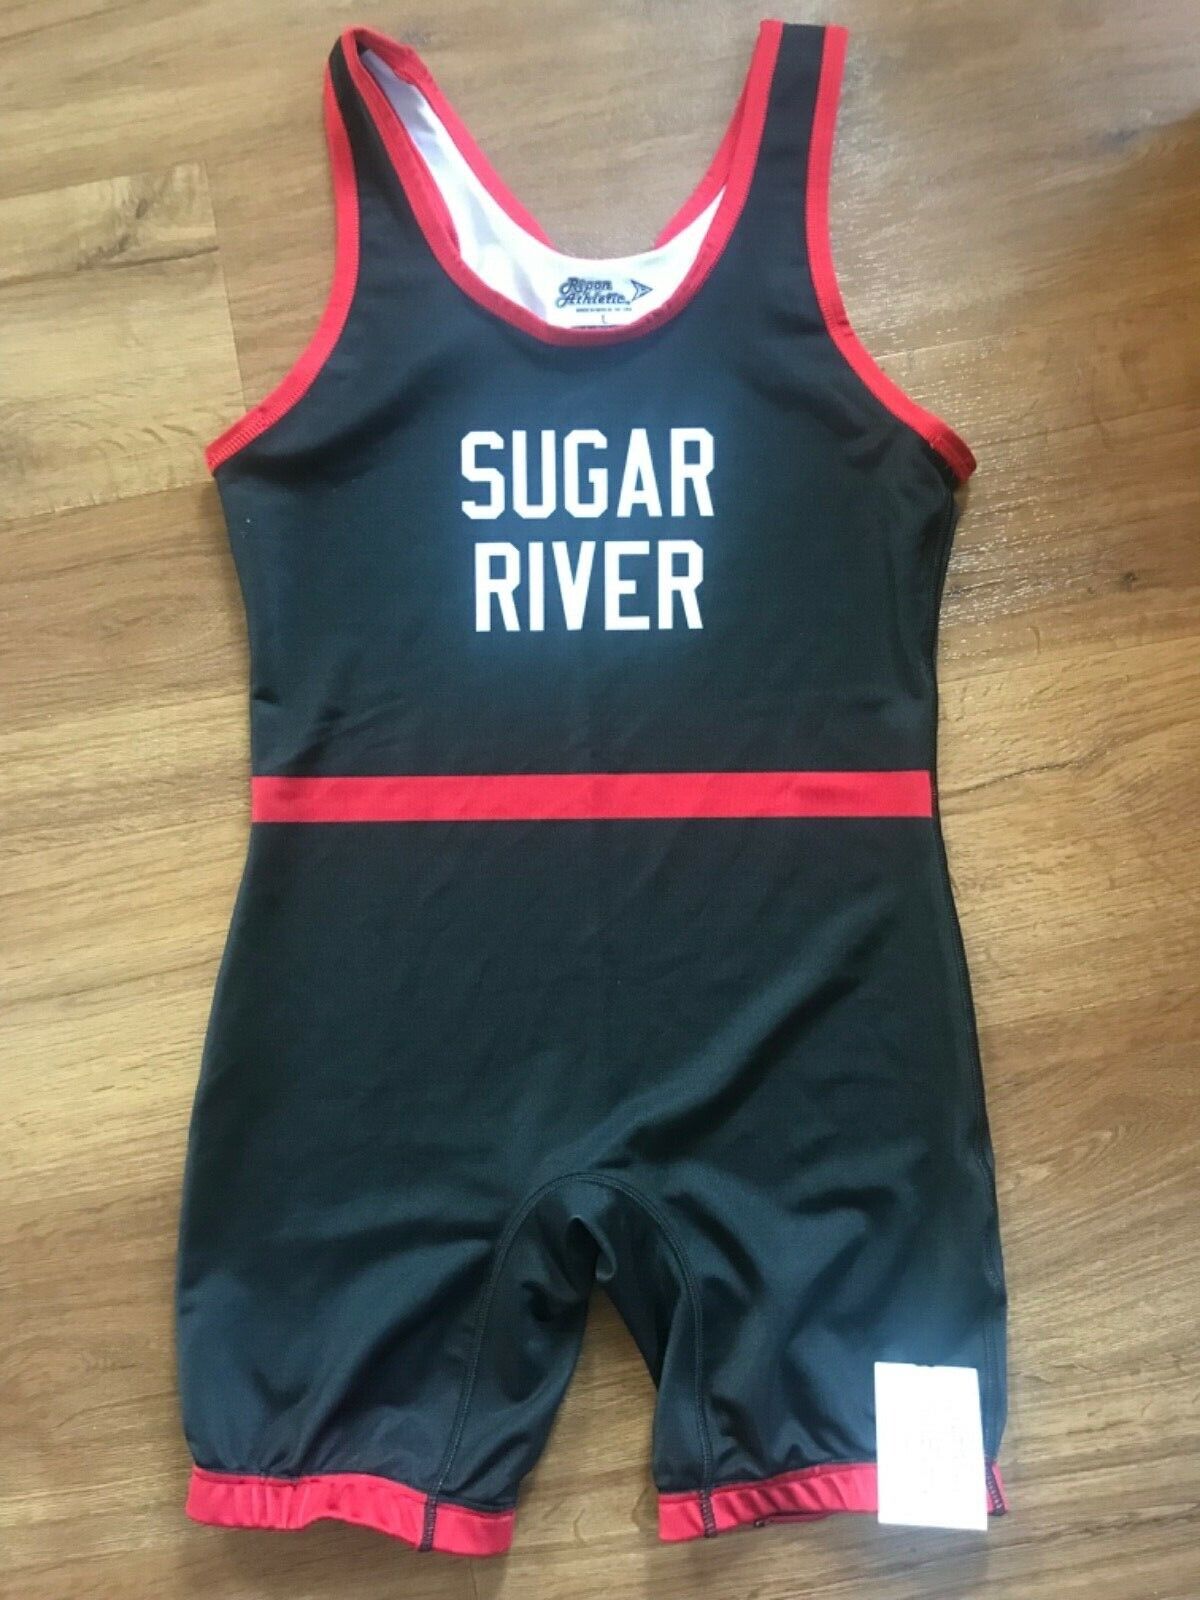 Brand Portland Mall new Wrestling Singlet Adult Size L Large Red - River” Black “Sugar